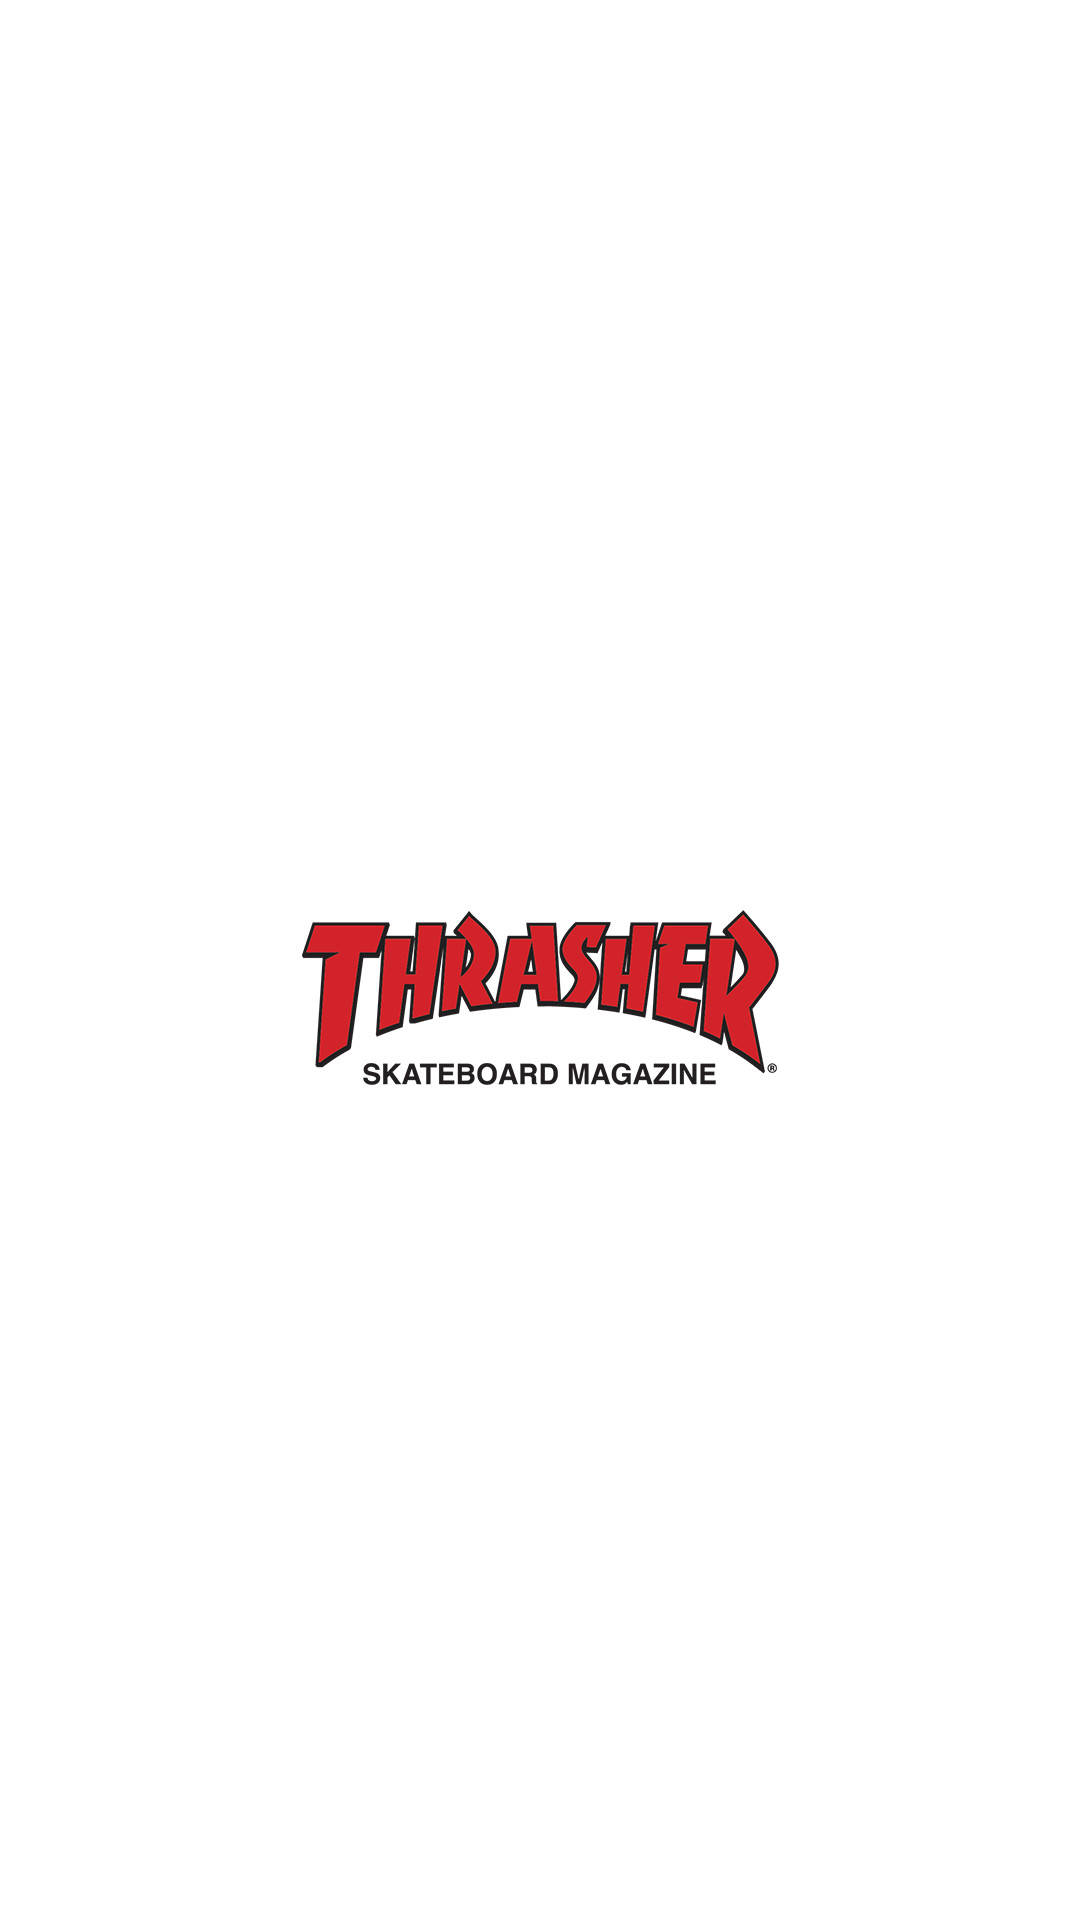 Thrasher Skateboard Magazine Logo Wallpaper